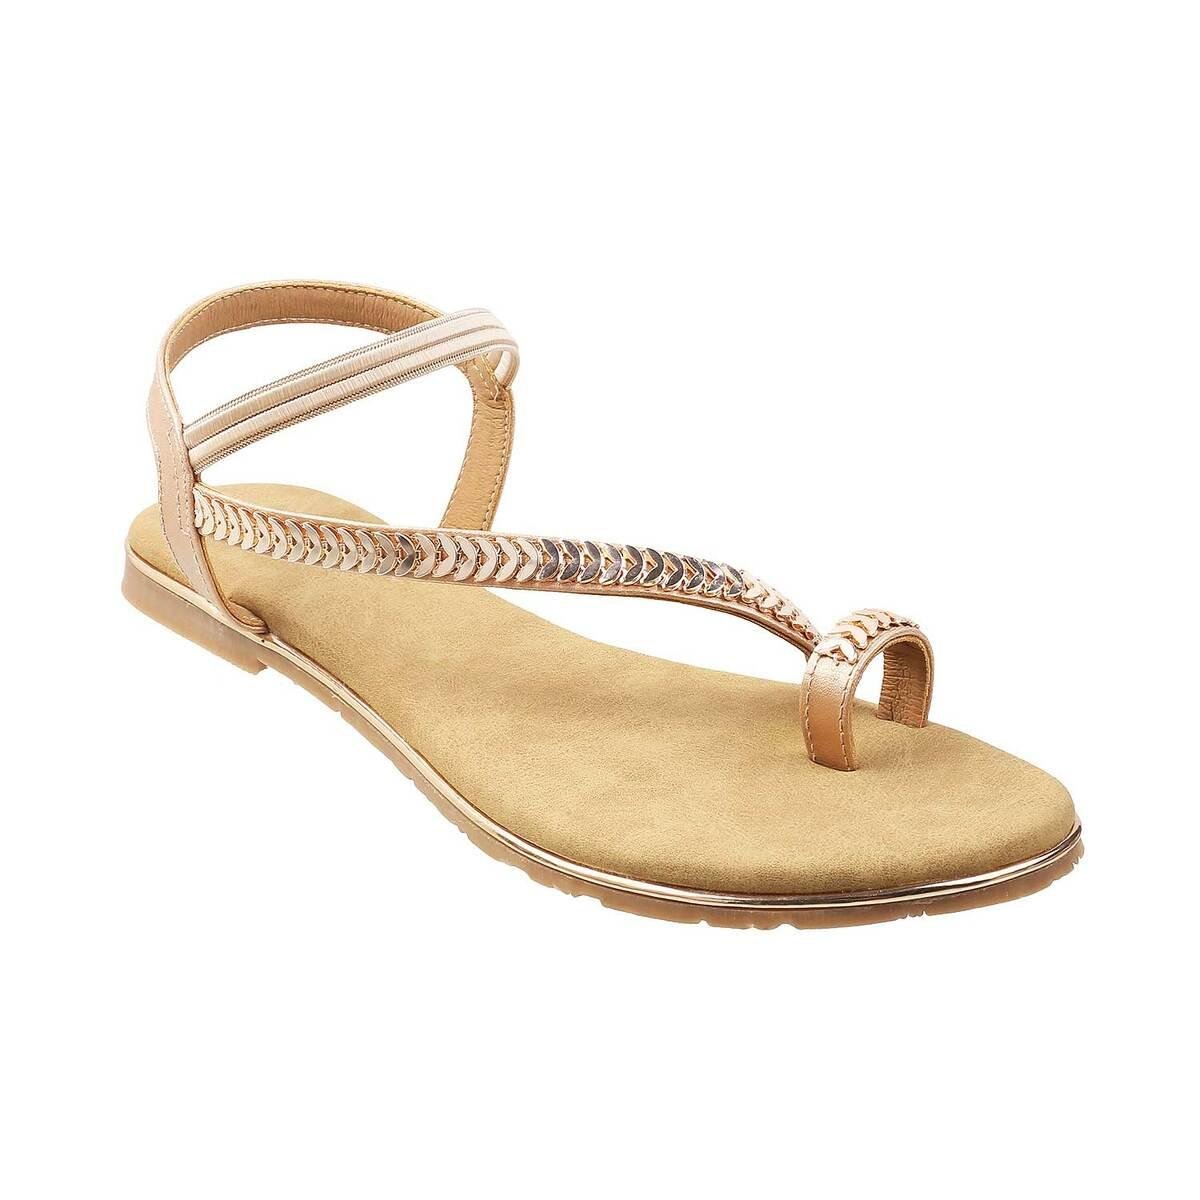 Buy Women Gold Casual Sandals Online | SKU: 33-3054-52-36-Metro Shoes